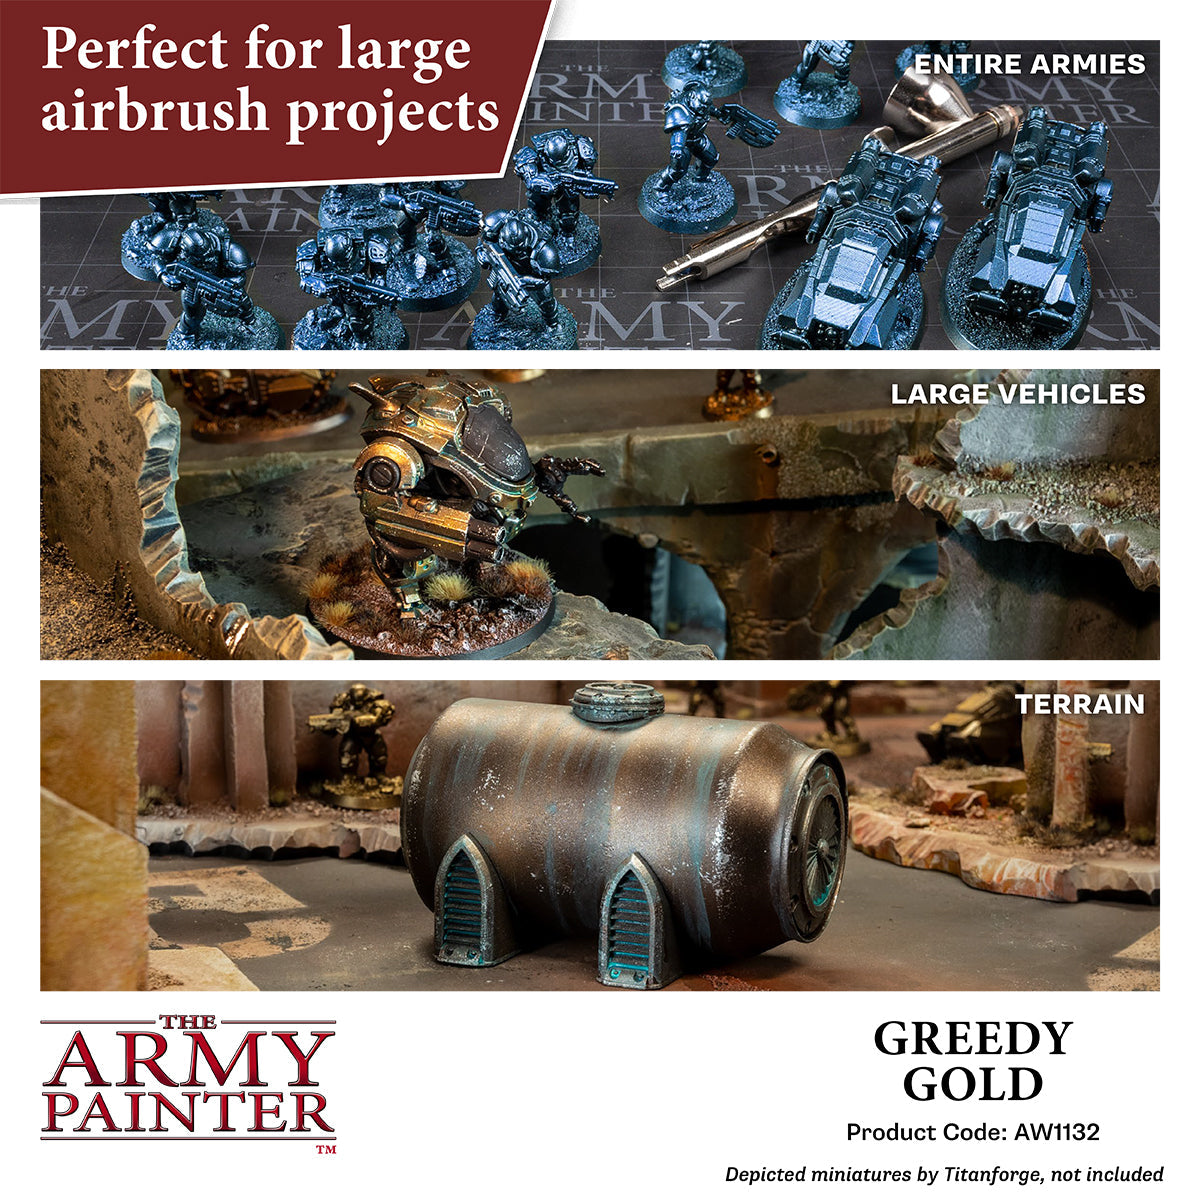 Colour Primer: Greedy Gold - A ideal basecoat for golden miniatures